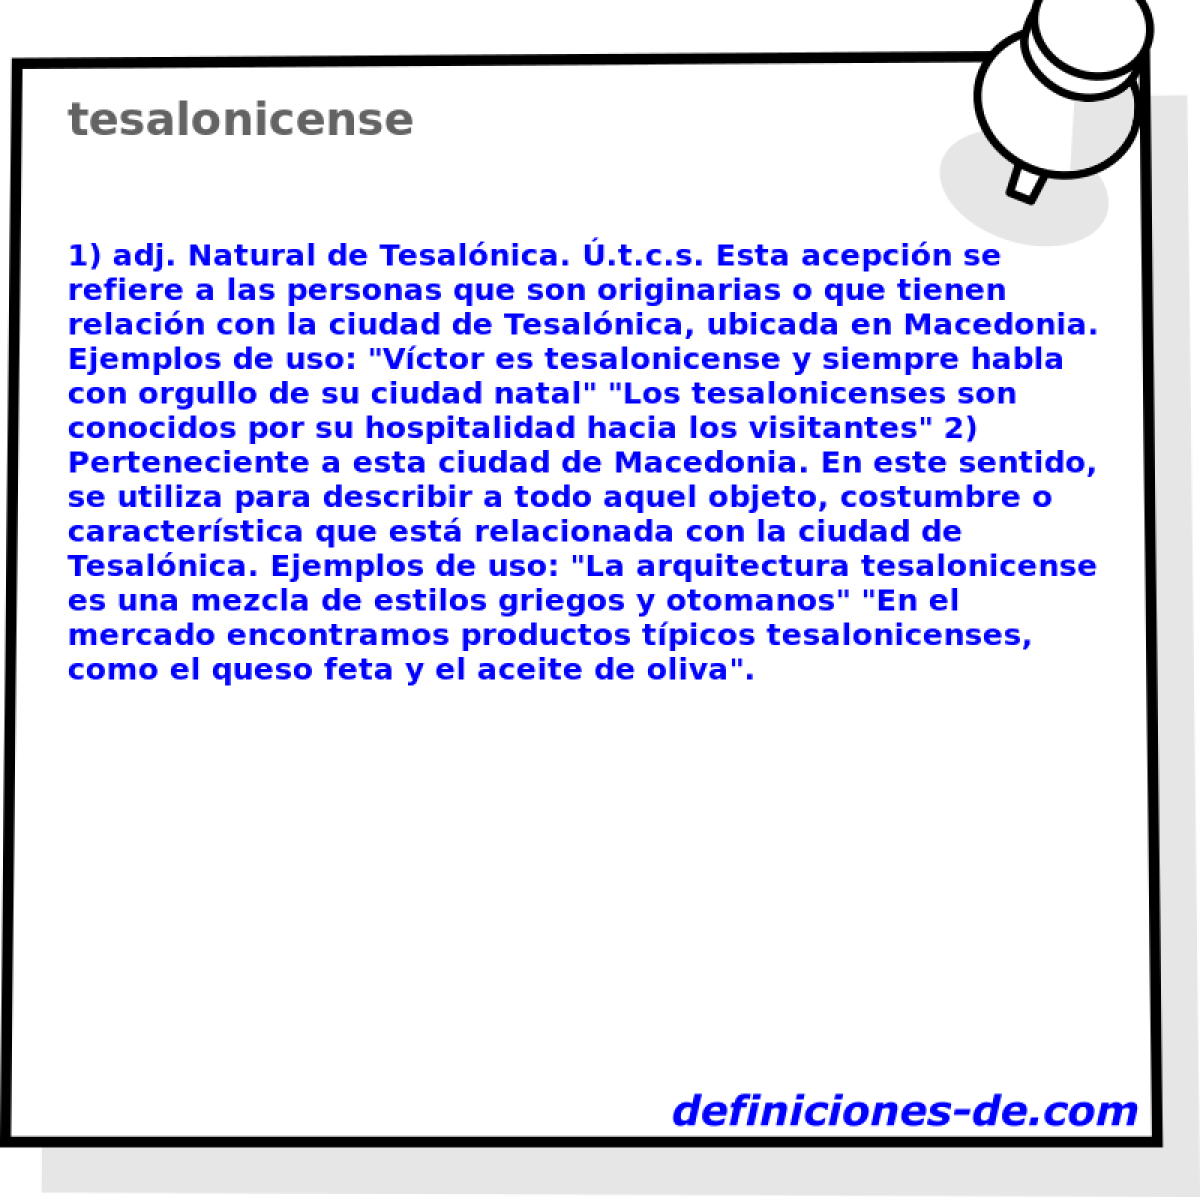 tesalonicense 